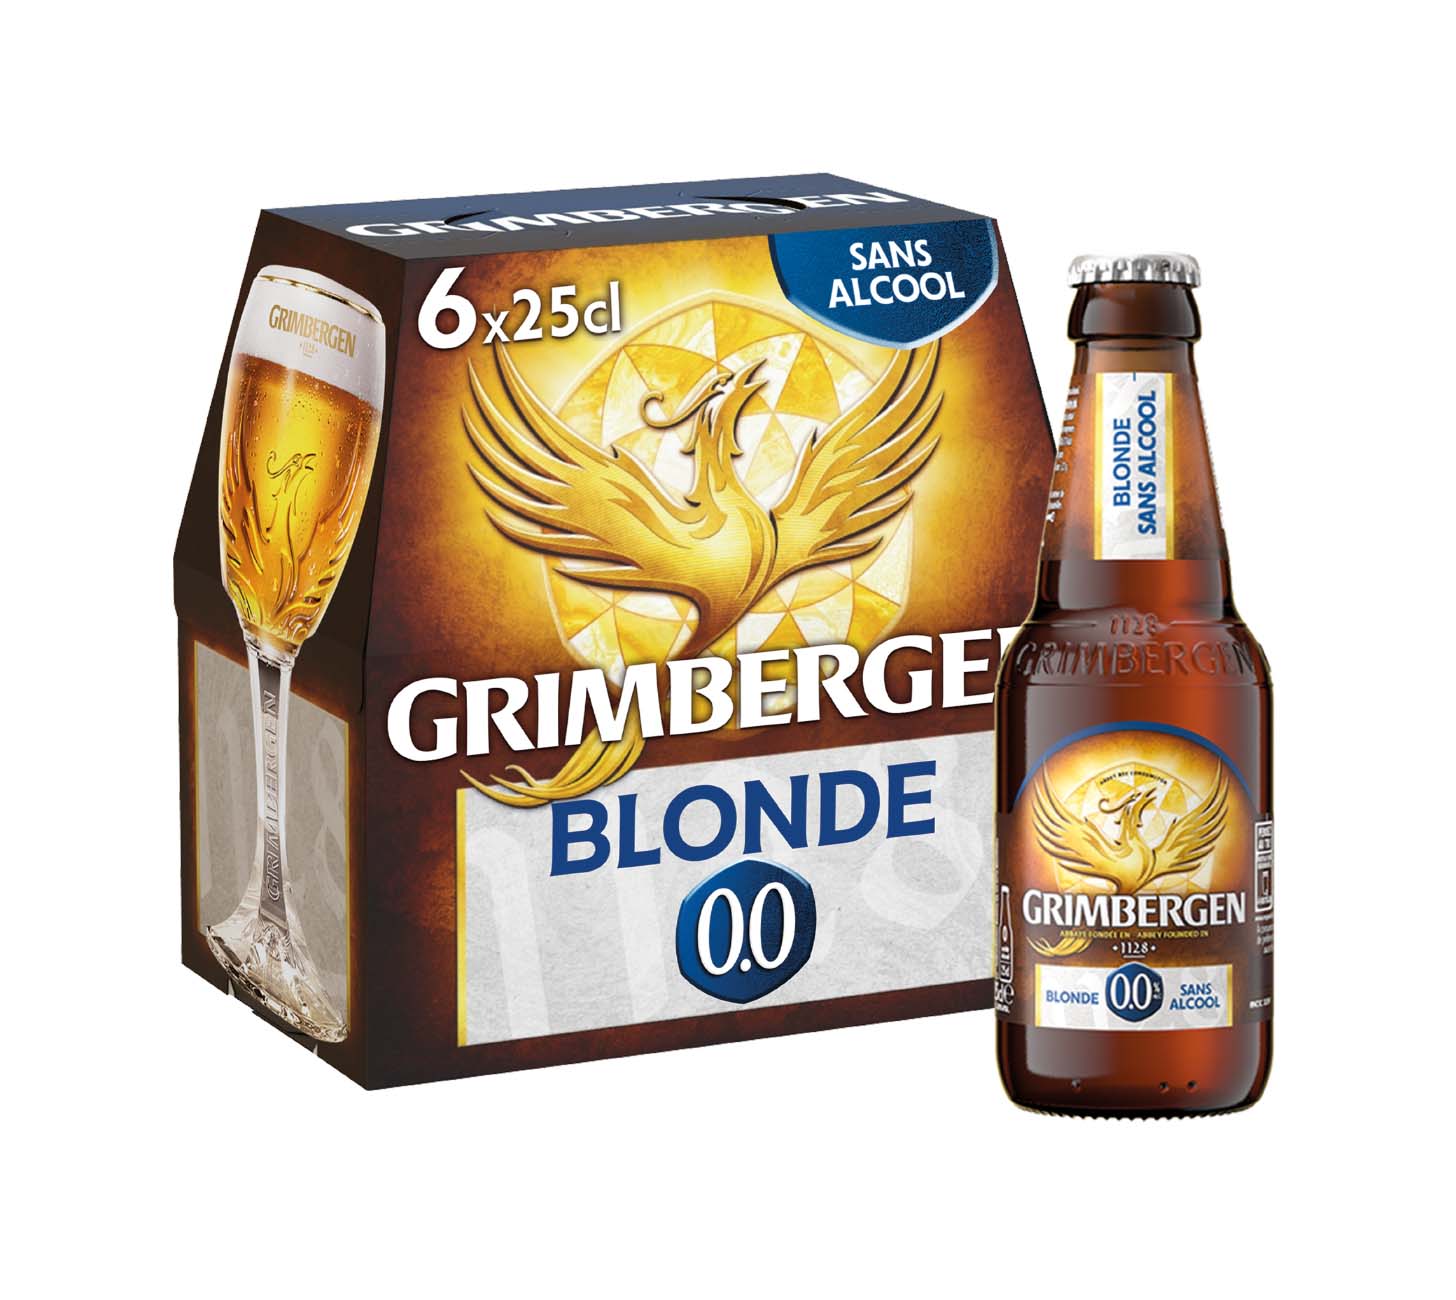 Bière Grimbergen Blonde : Grimbergen Blonde en bouteille